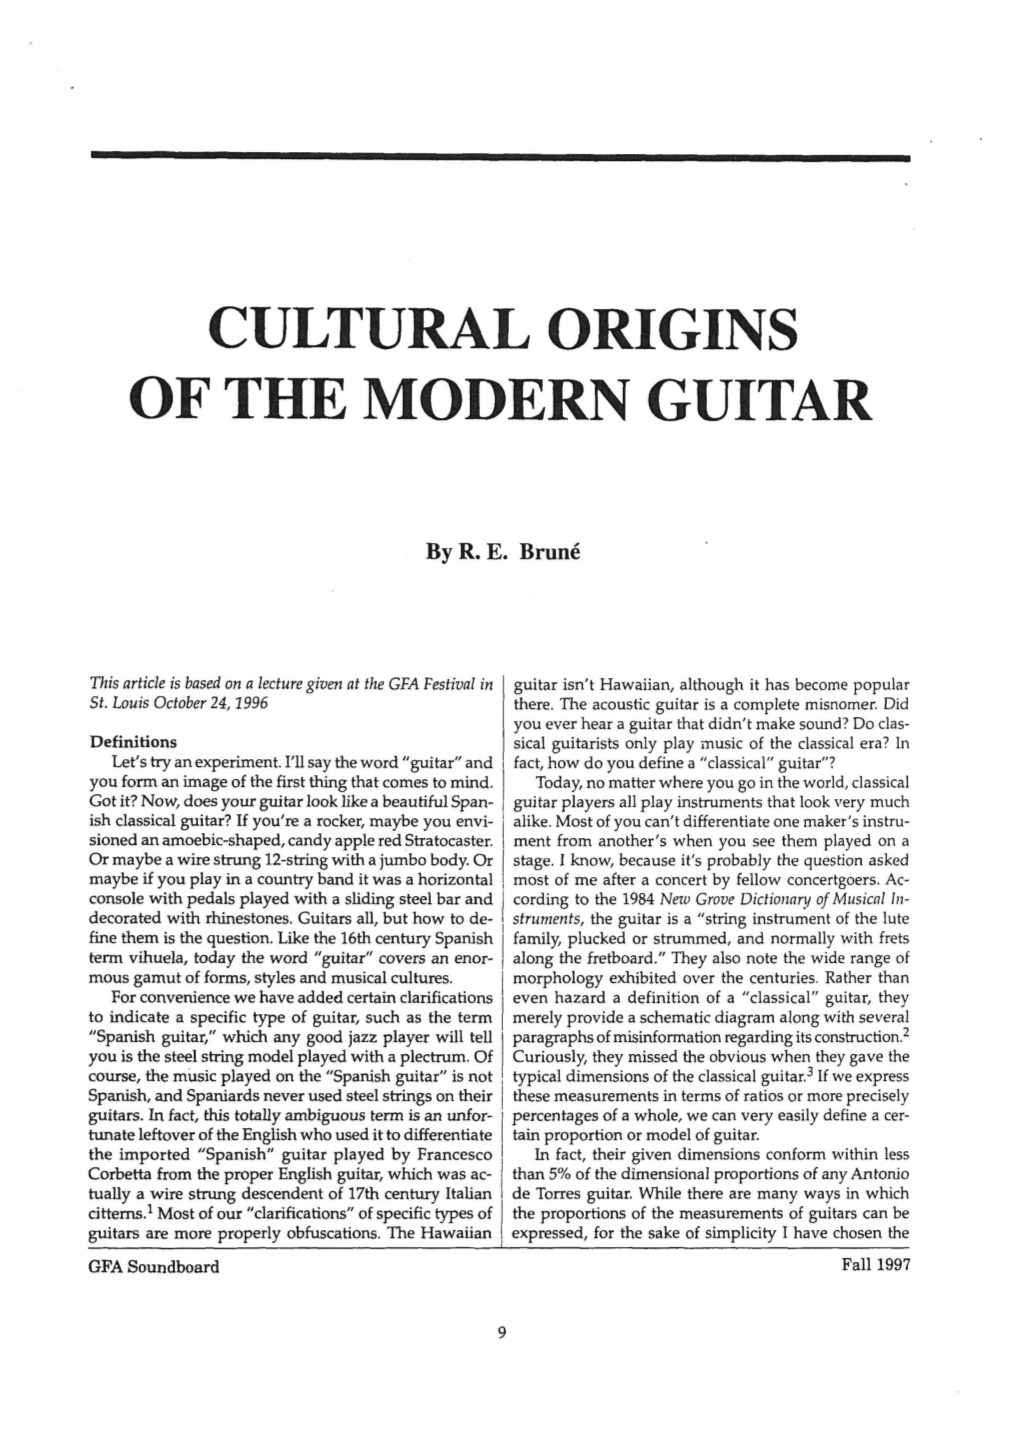 Cultural Origins of the Modern Guitar